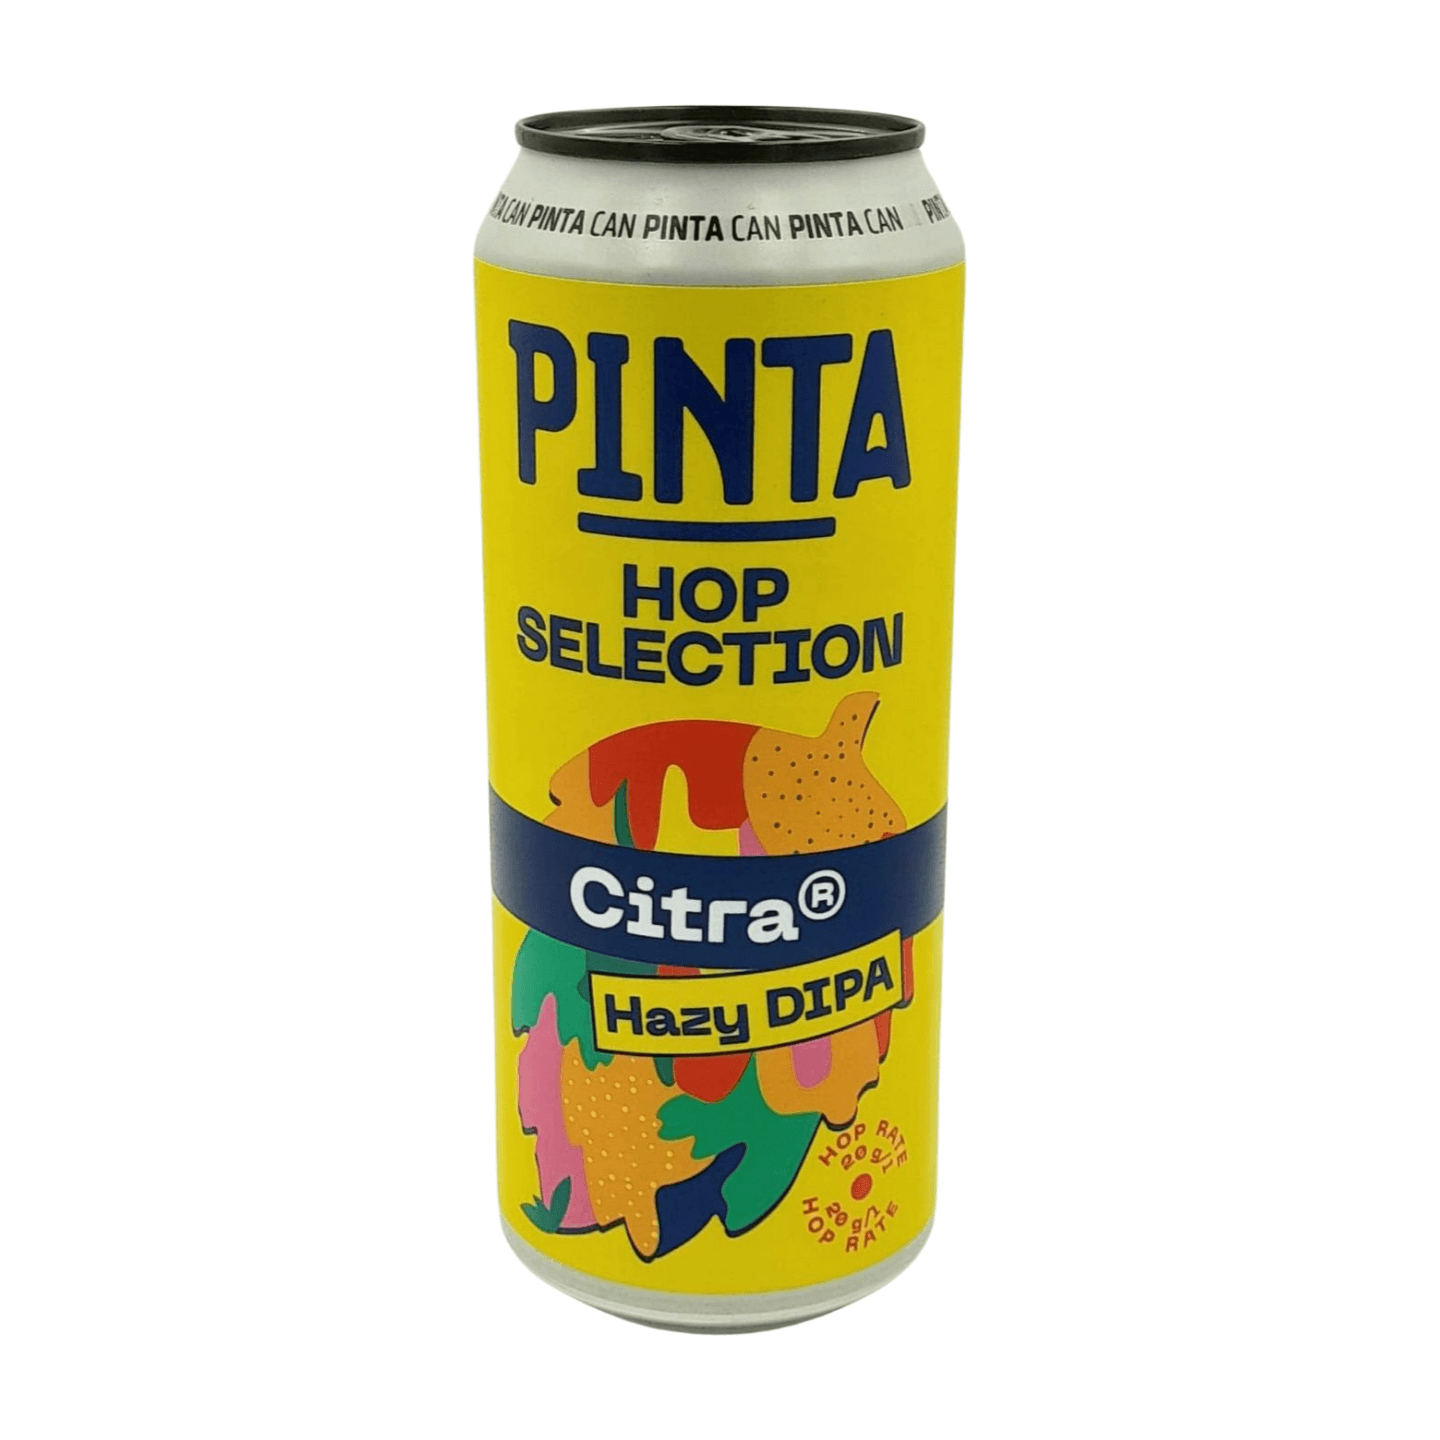 PINTA Hop Selection: Citra | Hazy DIPA Webshop Online Verdins Bierwinkel Rotterdam